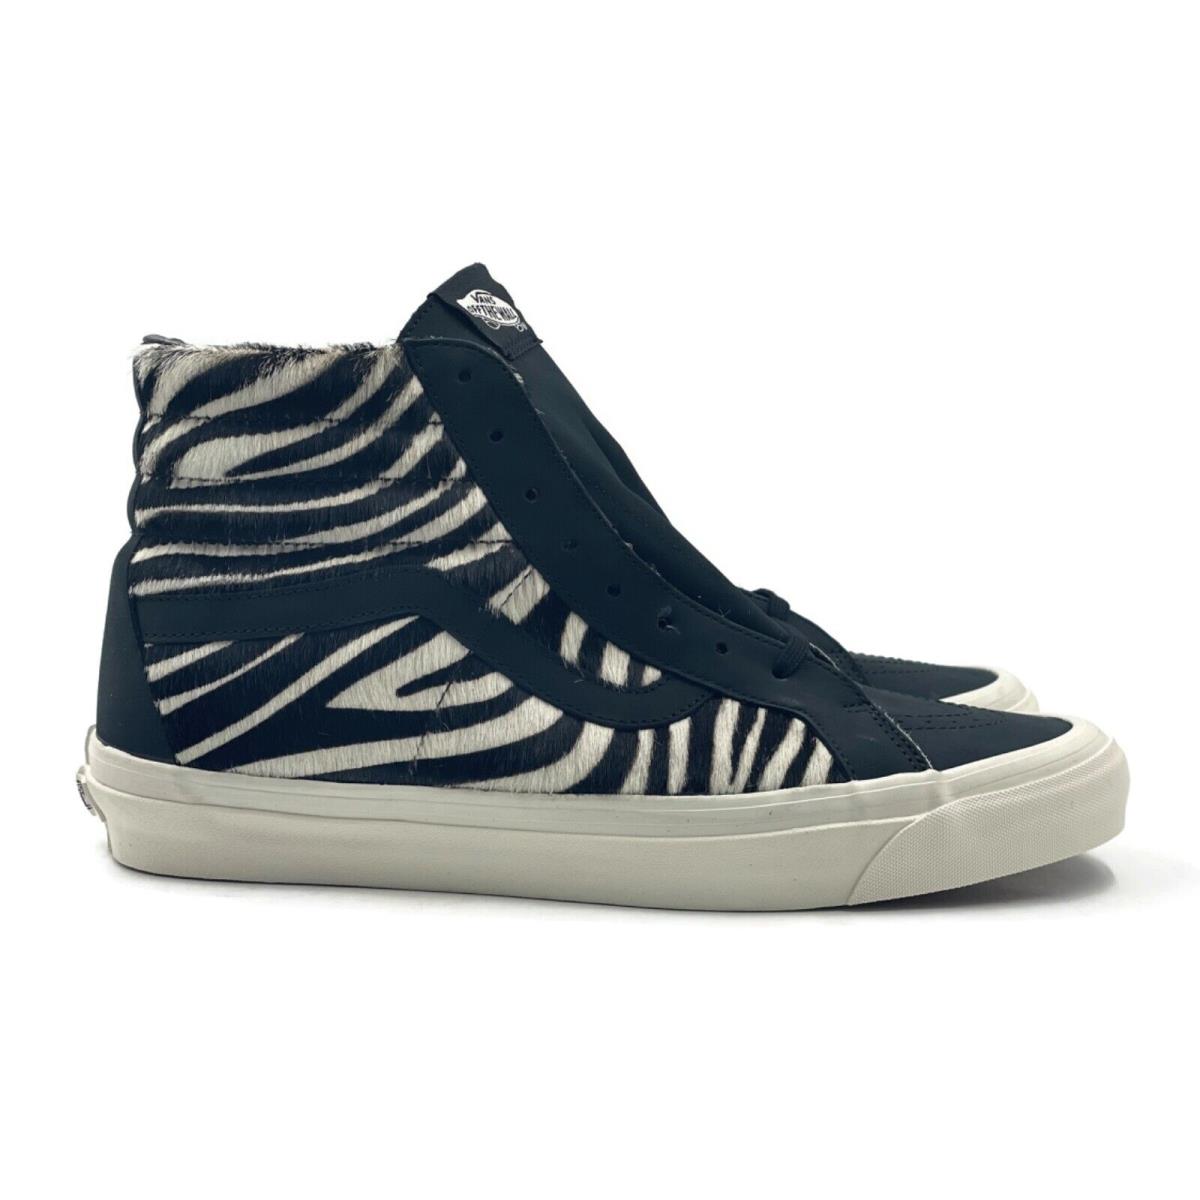 Vans Sk8 Hi 38 DX Mens Size 10 Premium Skate Shoe Black Zebra Trainer Sneaker